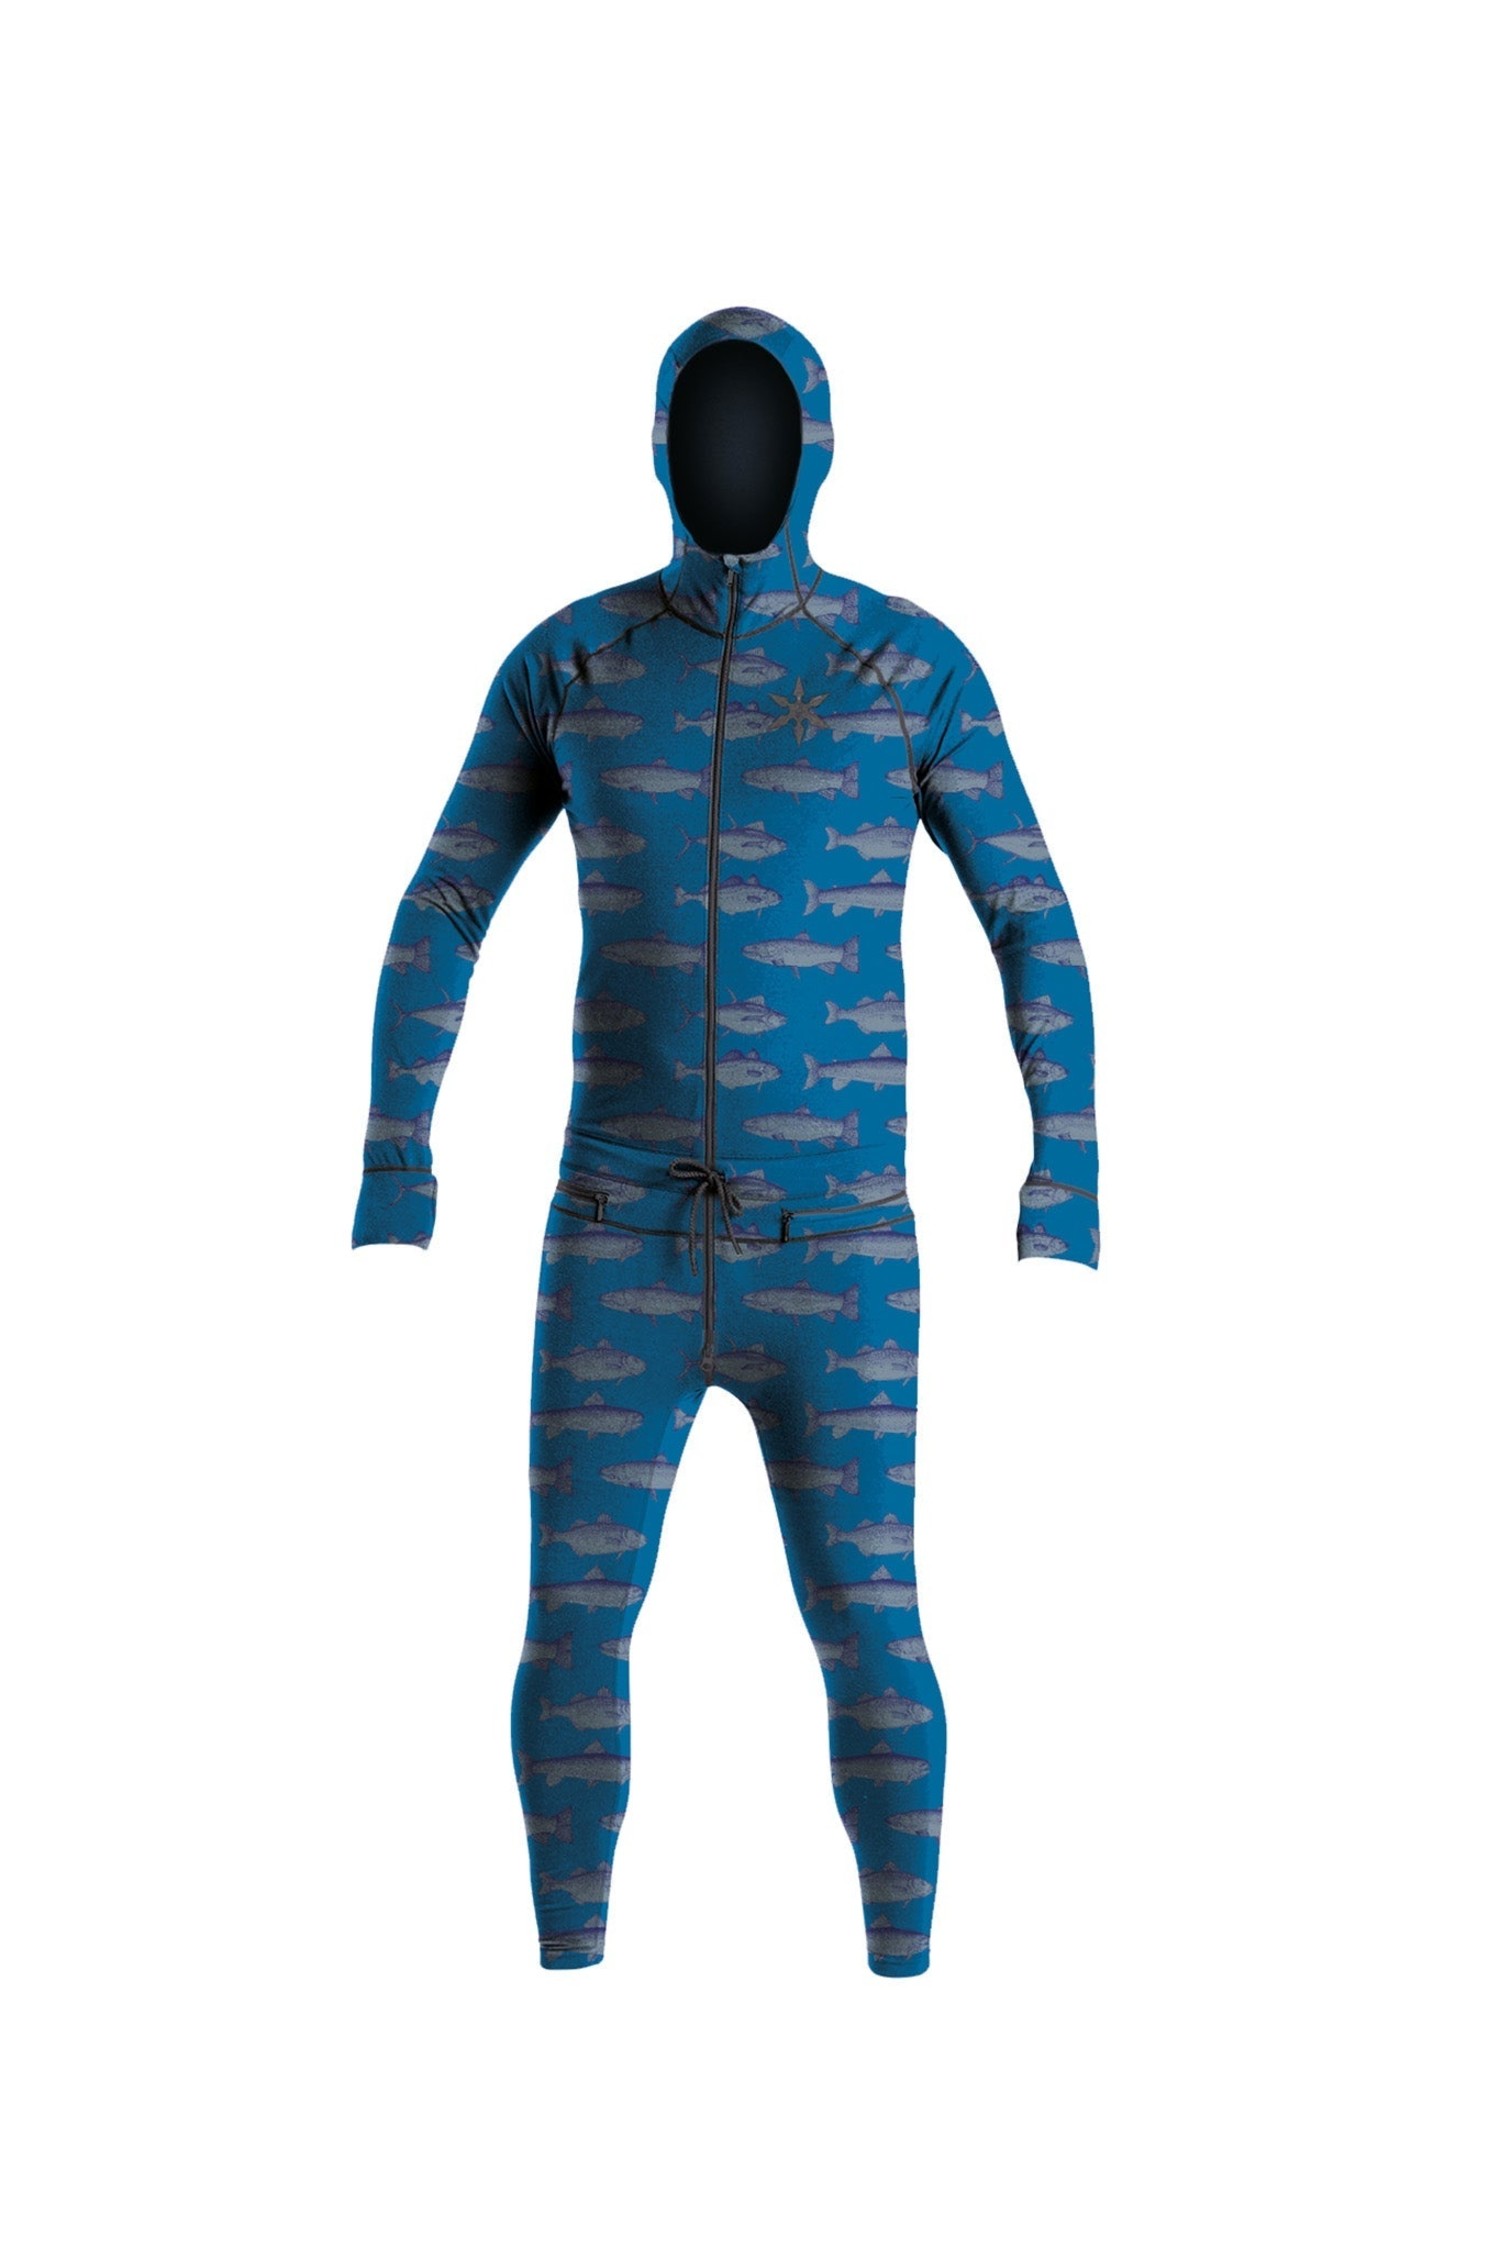 Ninja suit design from dream (Flats) B by ClawOfTheFallen -- Fur